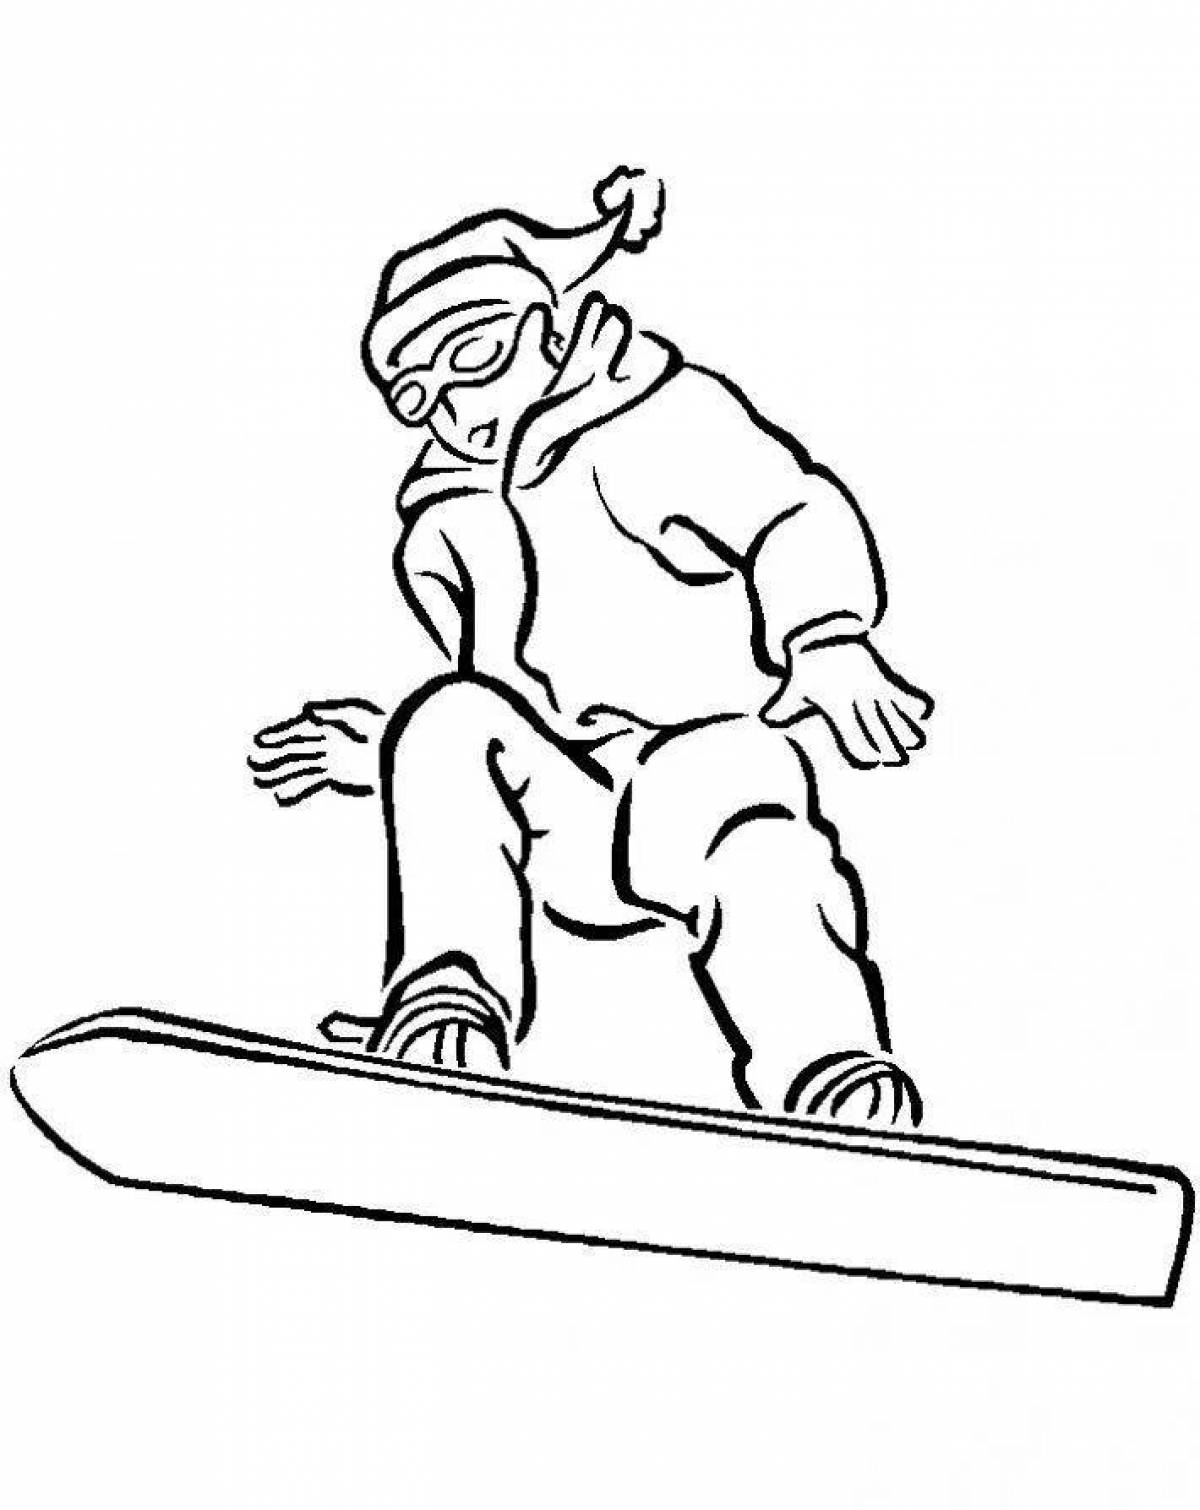 Joyful snowboard coloring page